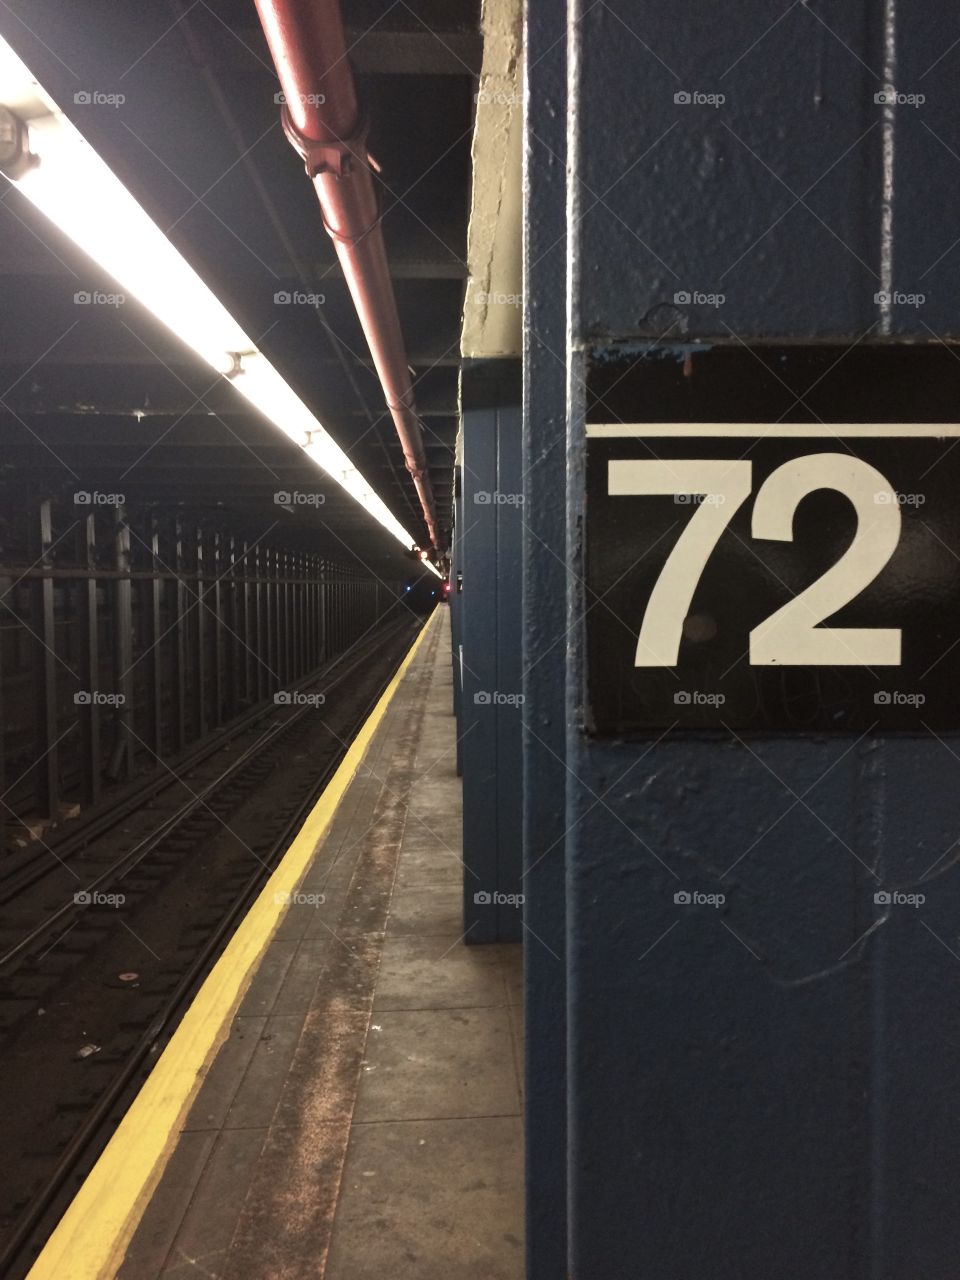 72nd street Subway . Artfully captured image of this NYC subway landing